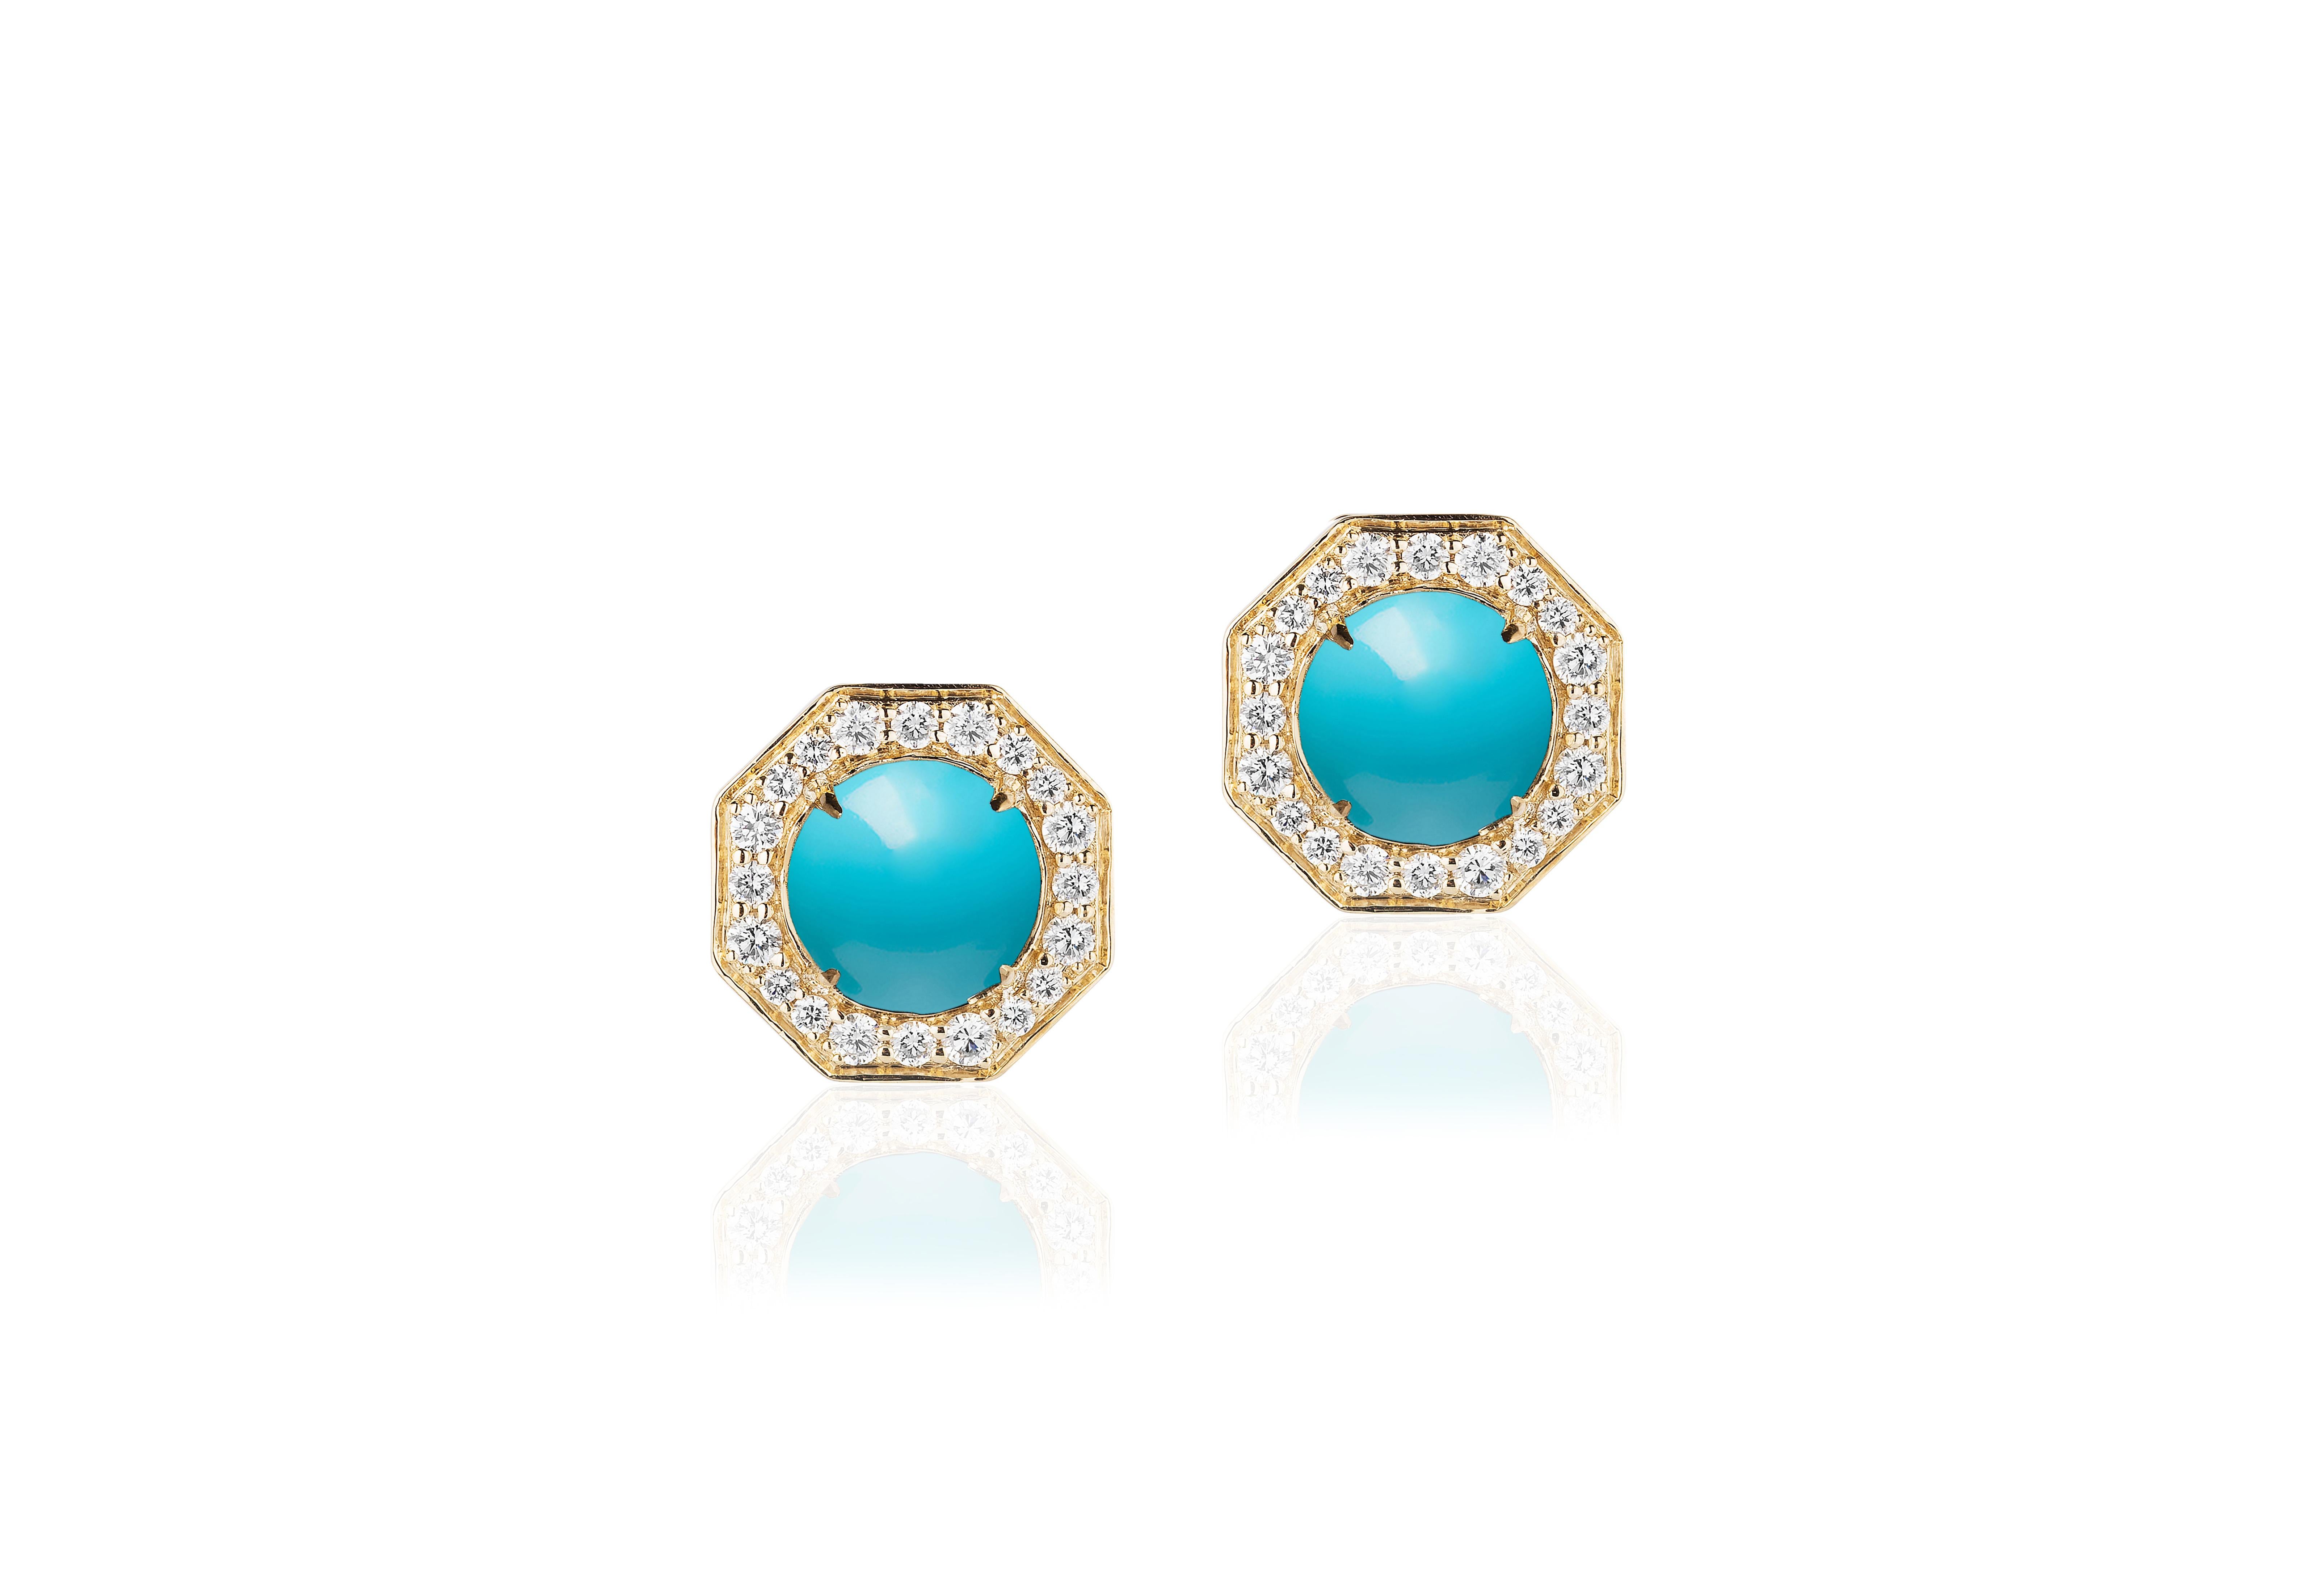 Contemporary Goshwara Turquoise And Diamond Stud Earrings